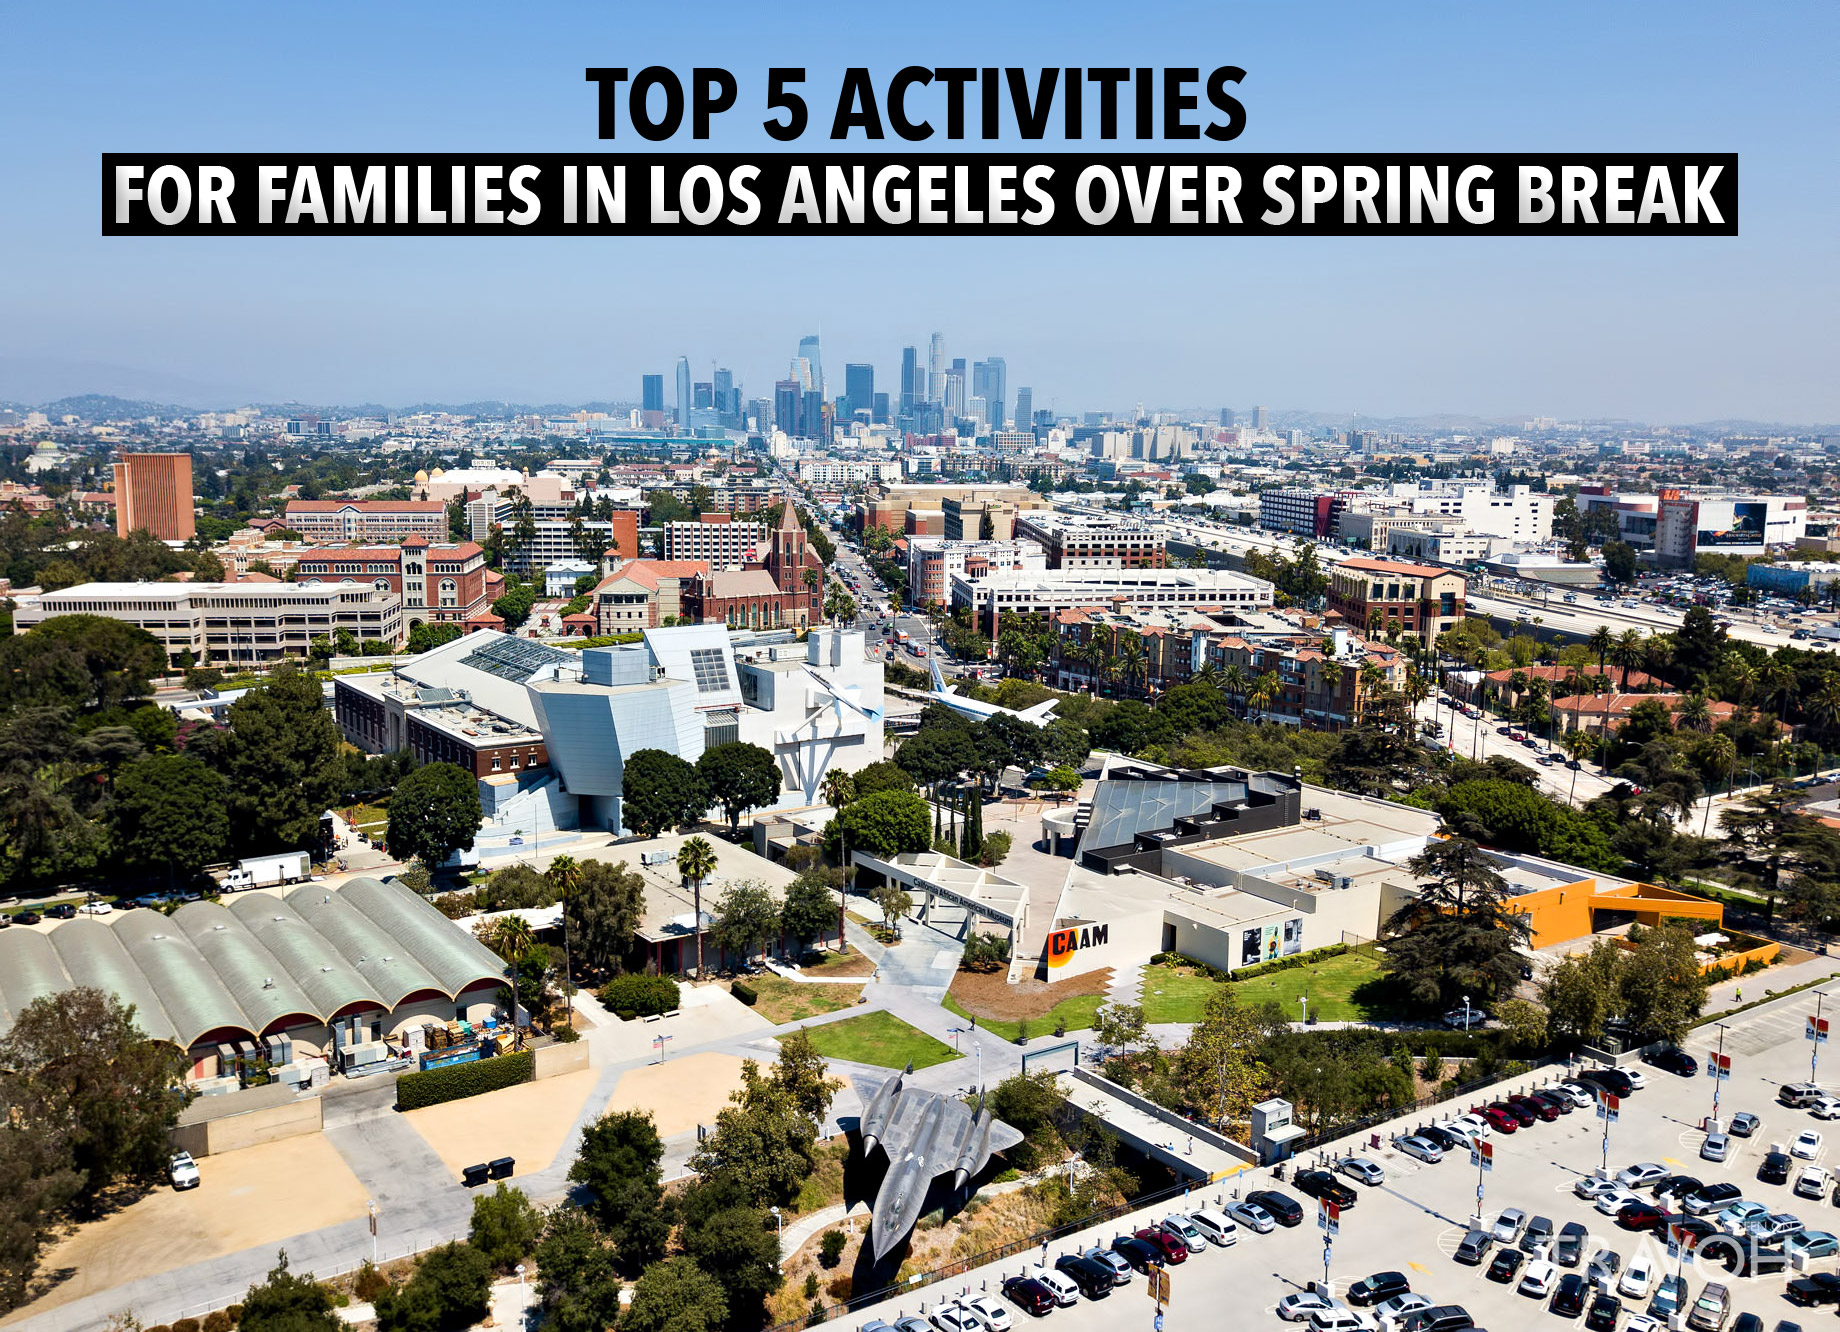 Top 5 Activities for Families in Los Angeles Over Spring Break